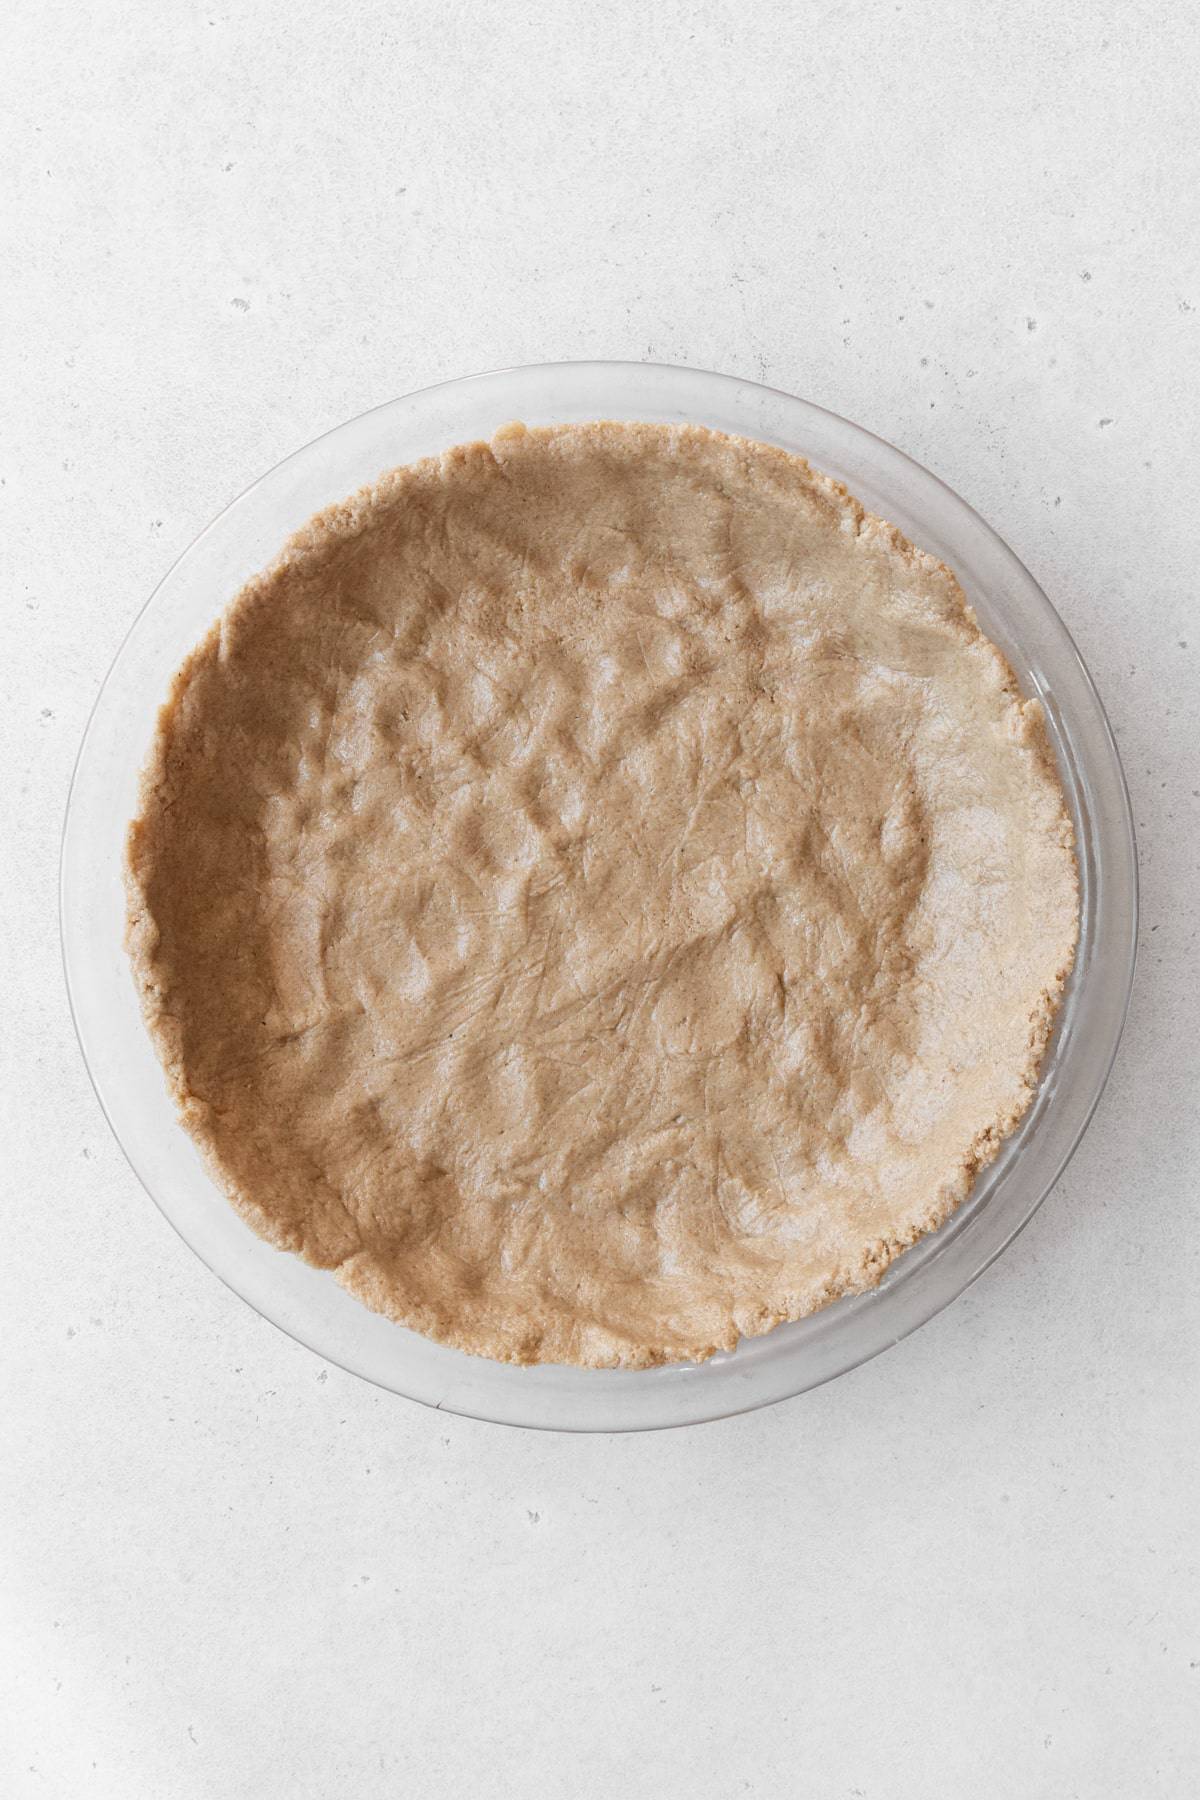 Oatmeal crust dough pressed into a glass pie dish.